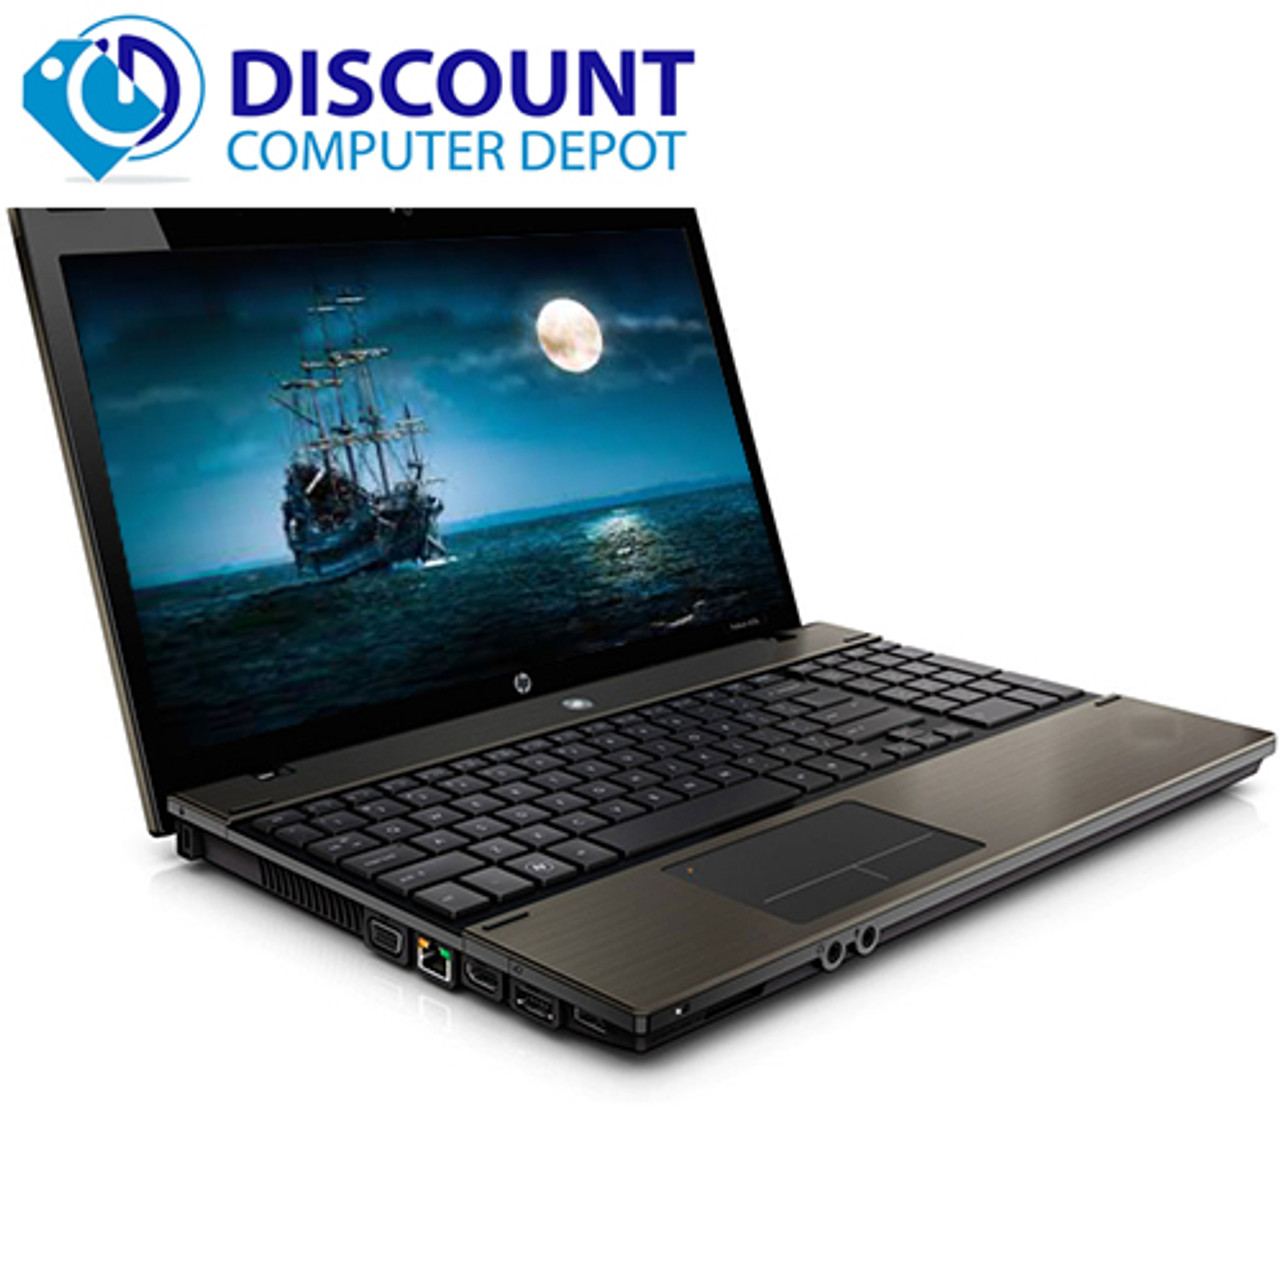 Fast HP 4520s Laptop Core I3 2.53GHz 4GB 320GB Win 10 Home WiFi